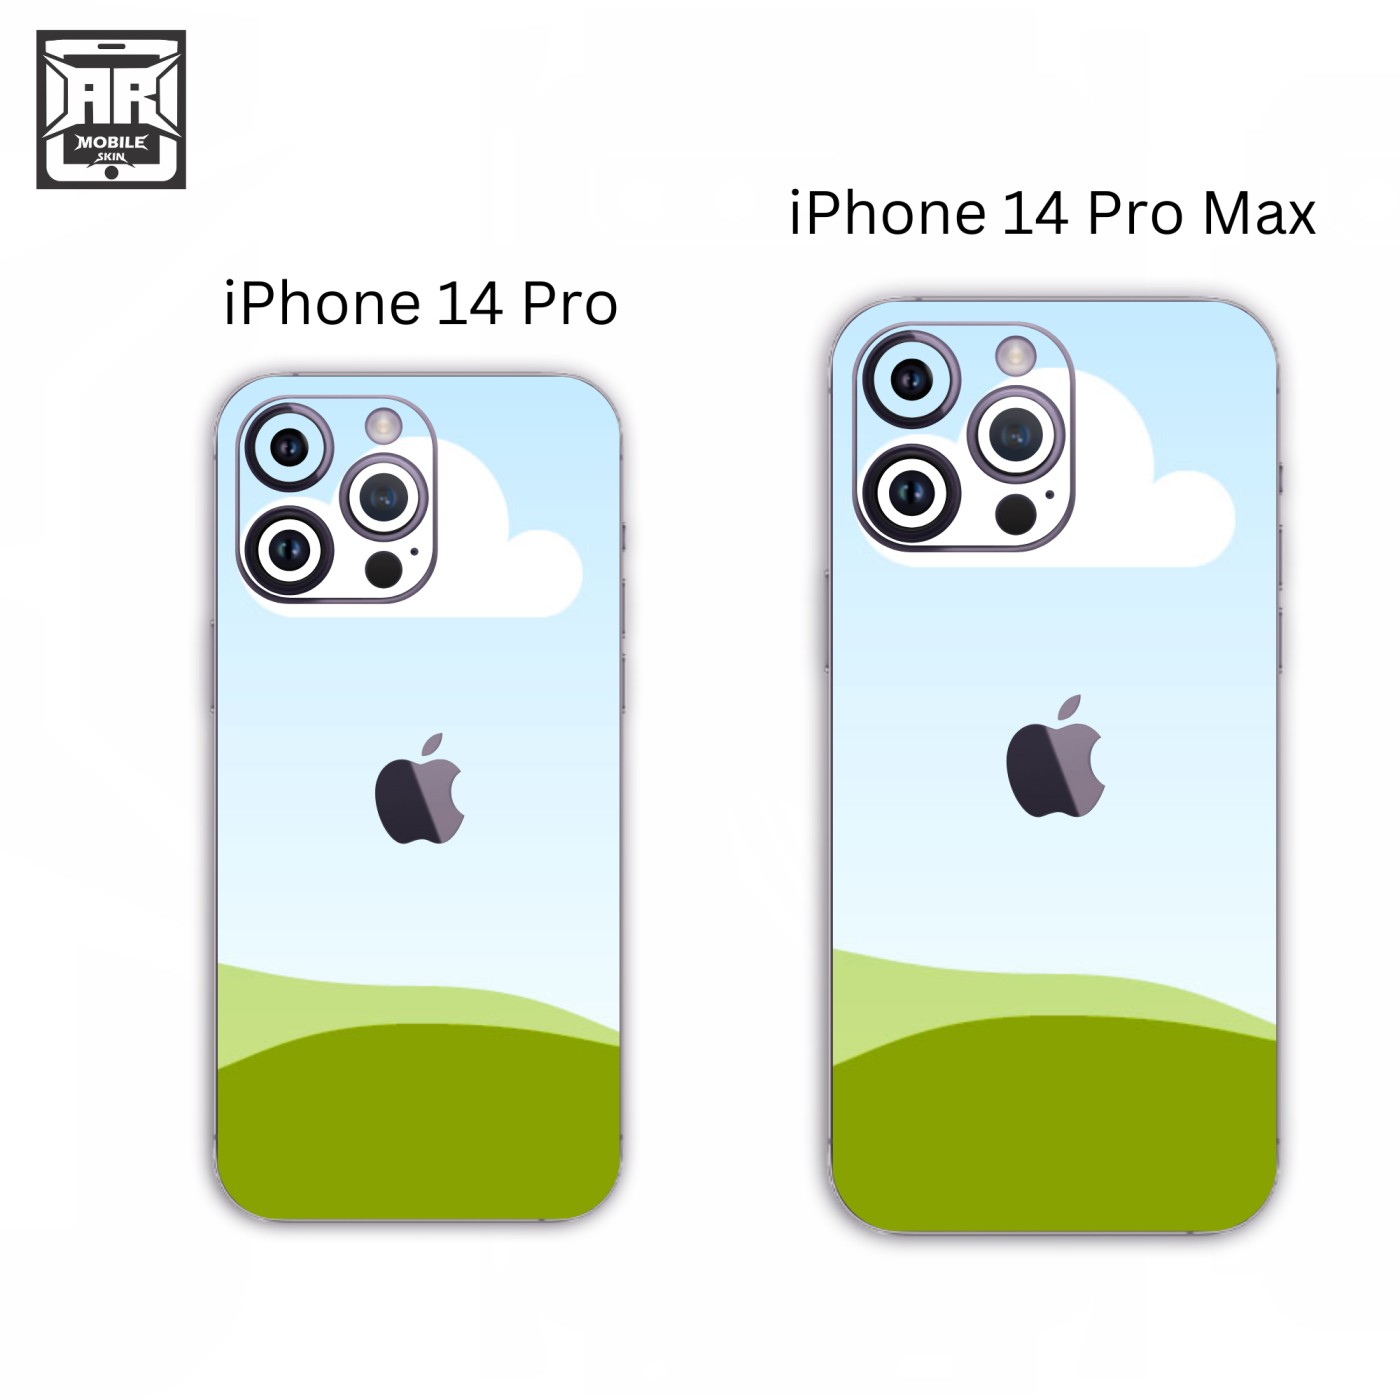 iPhone 14 Pro Max Skin Mockup Canva